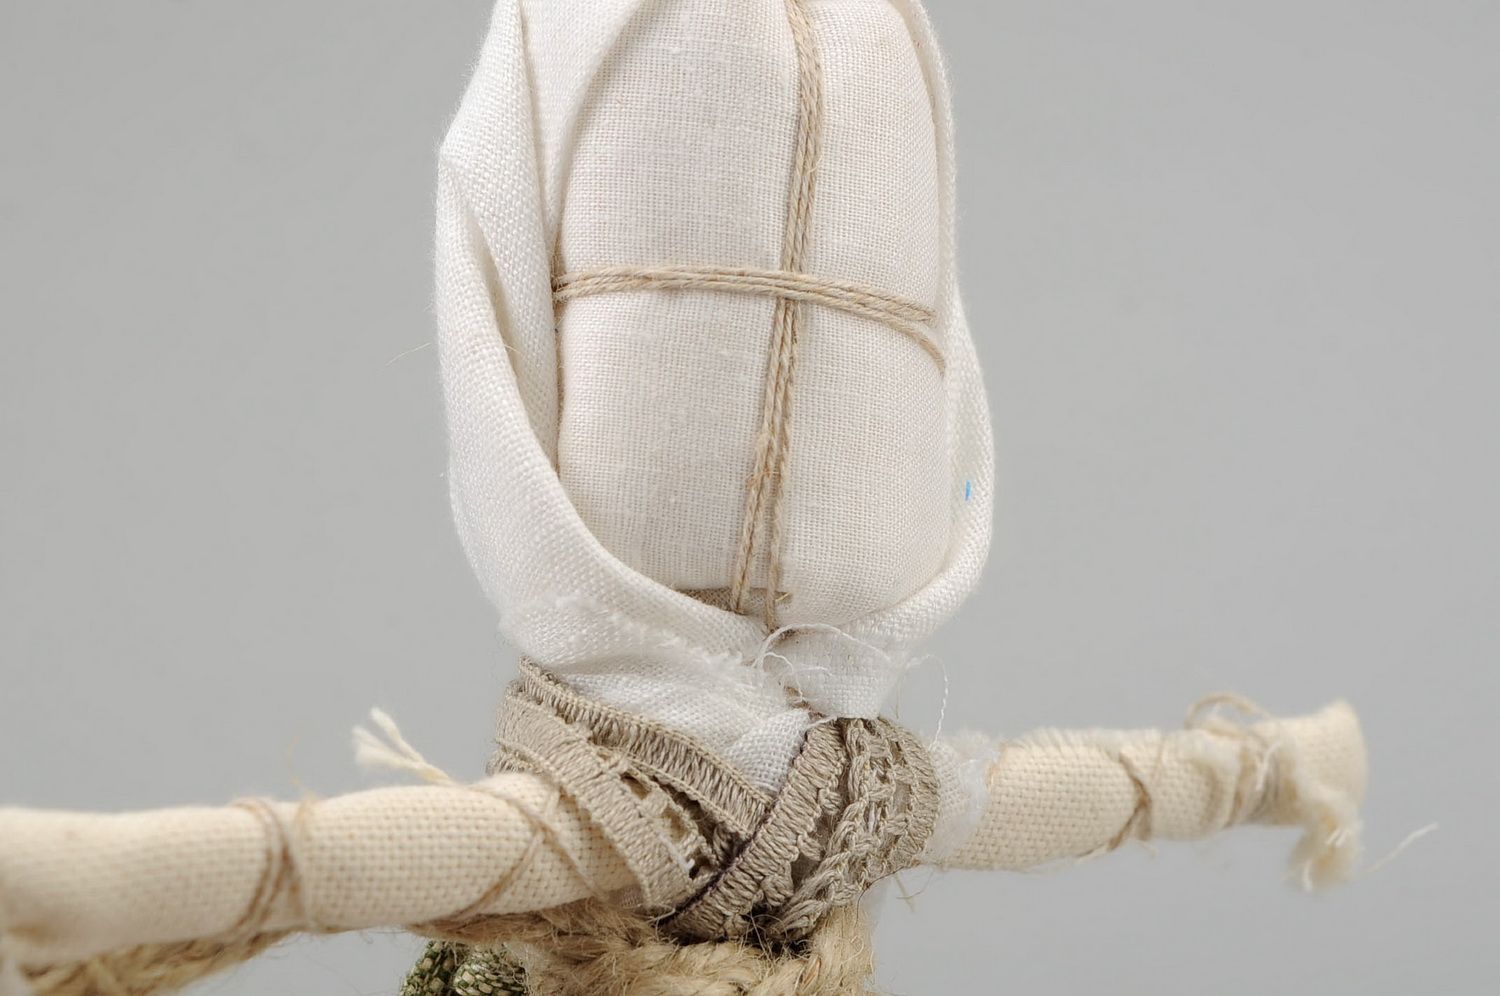 Motanka doll made of flax photo 5